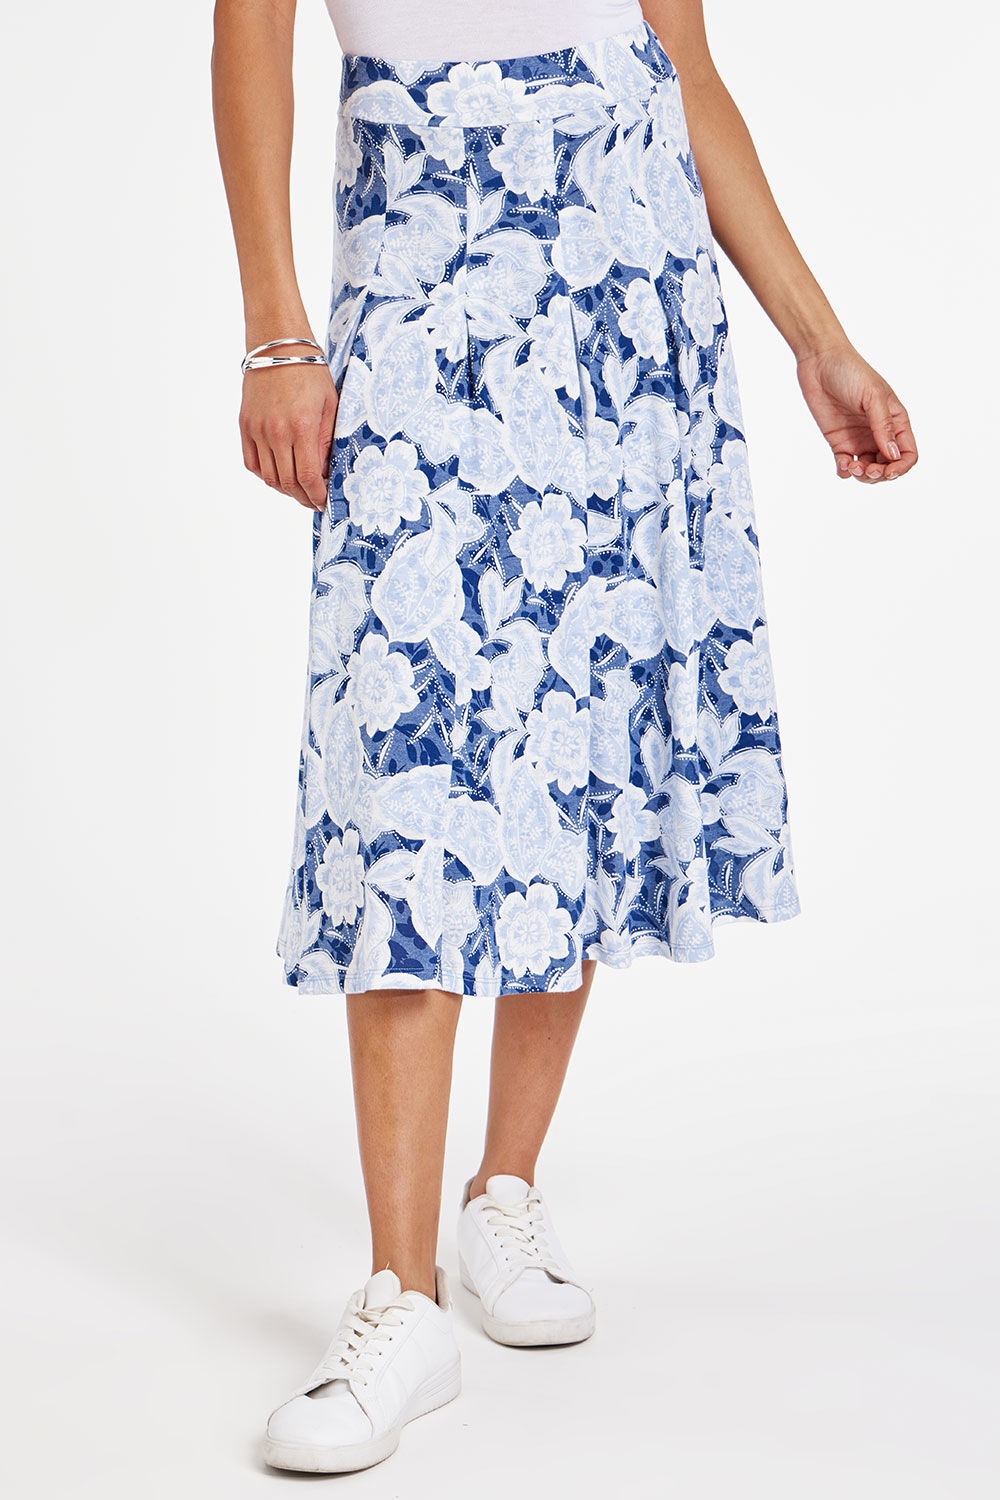 Bonmarche Navy Leaf Print Burnout Elasticated Skirt, Size: 18 - Holiday Shop